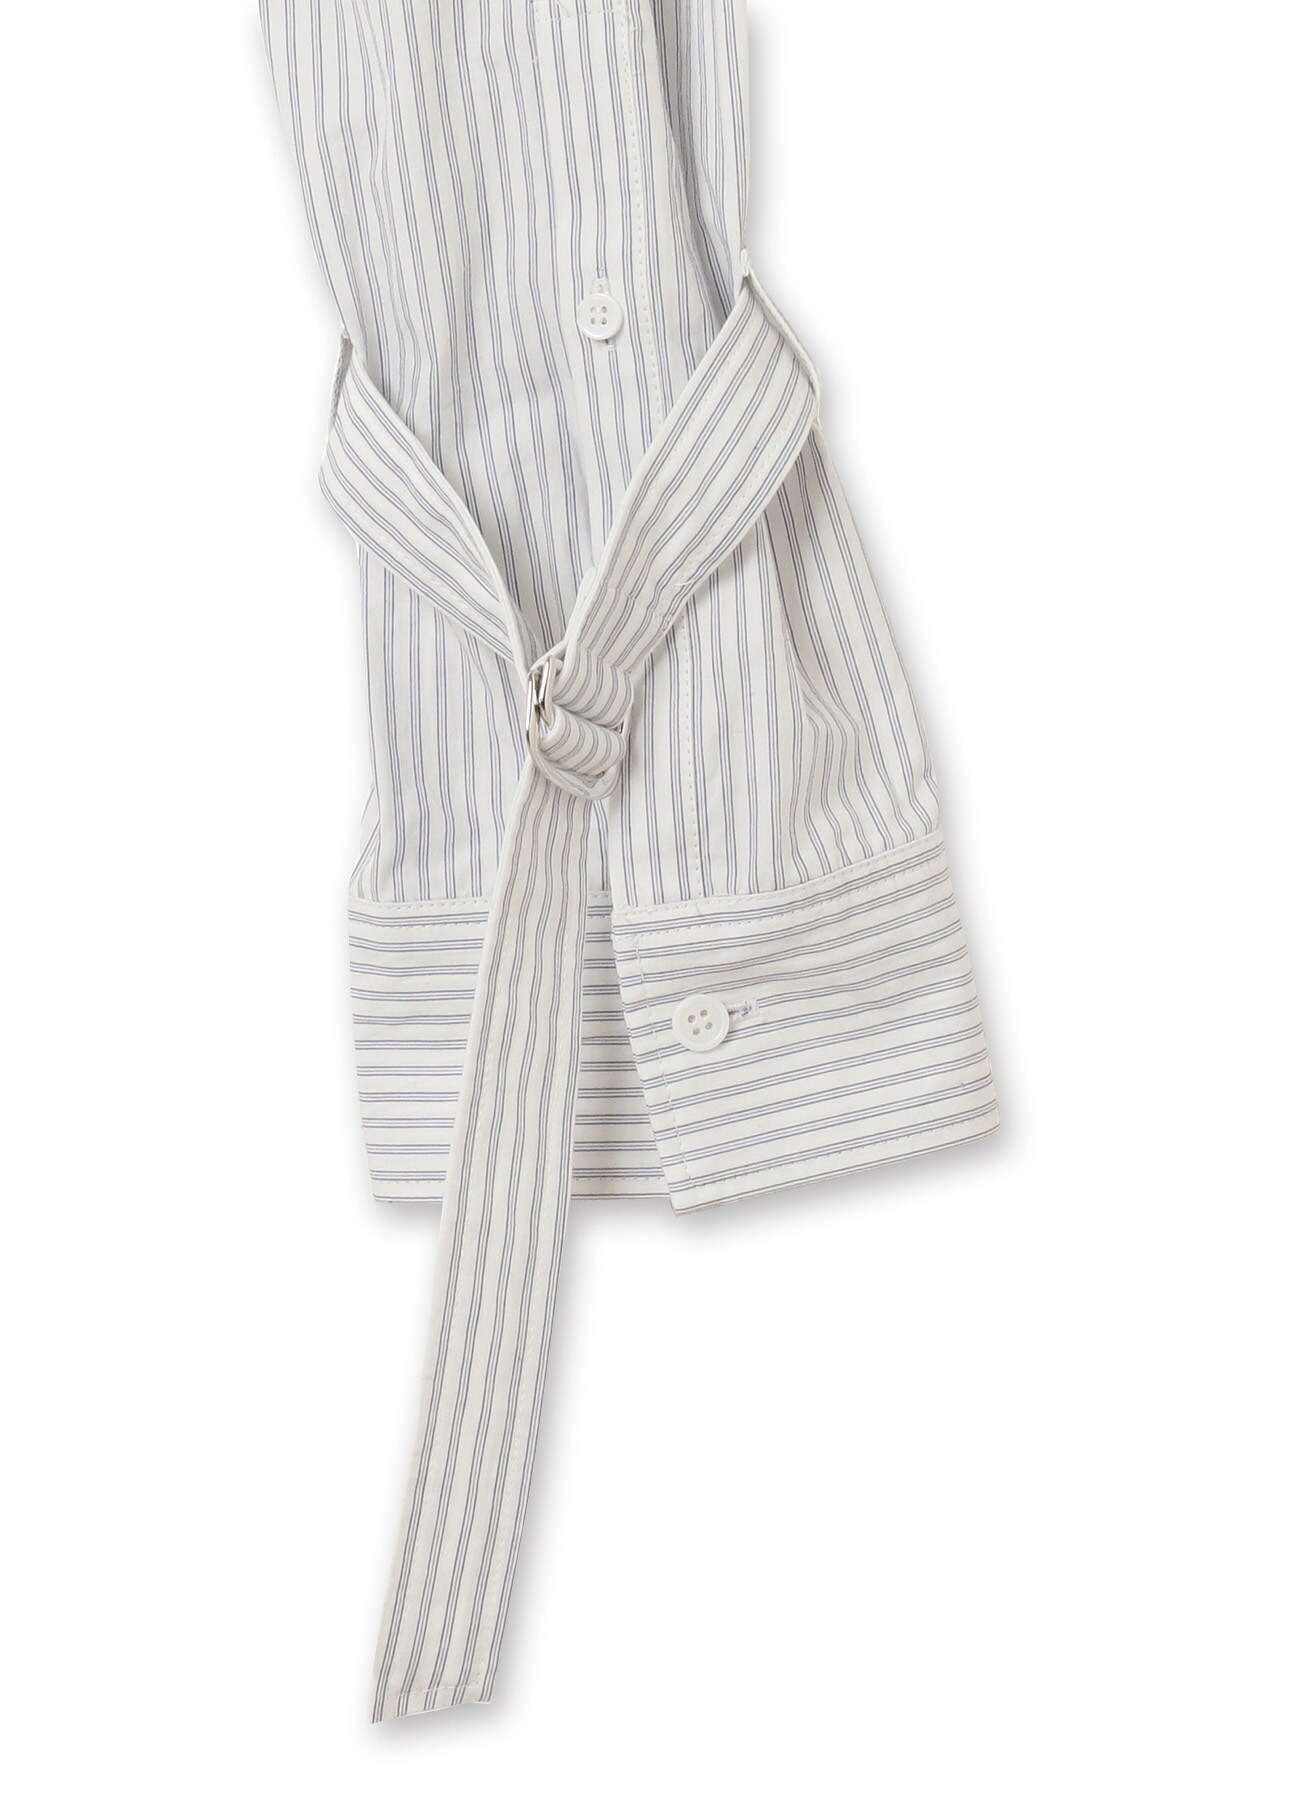 Stripe/Jersey combination Shirt docking cut sew